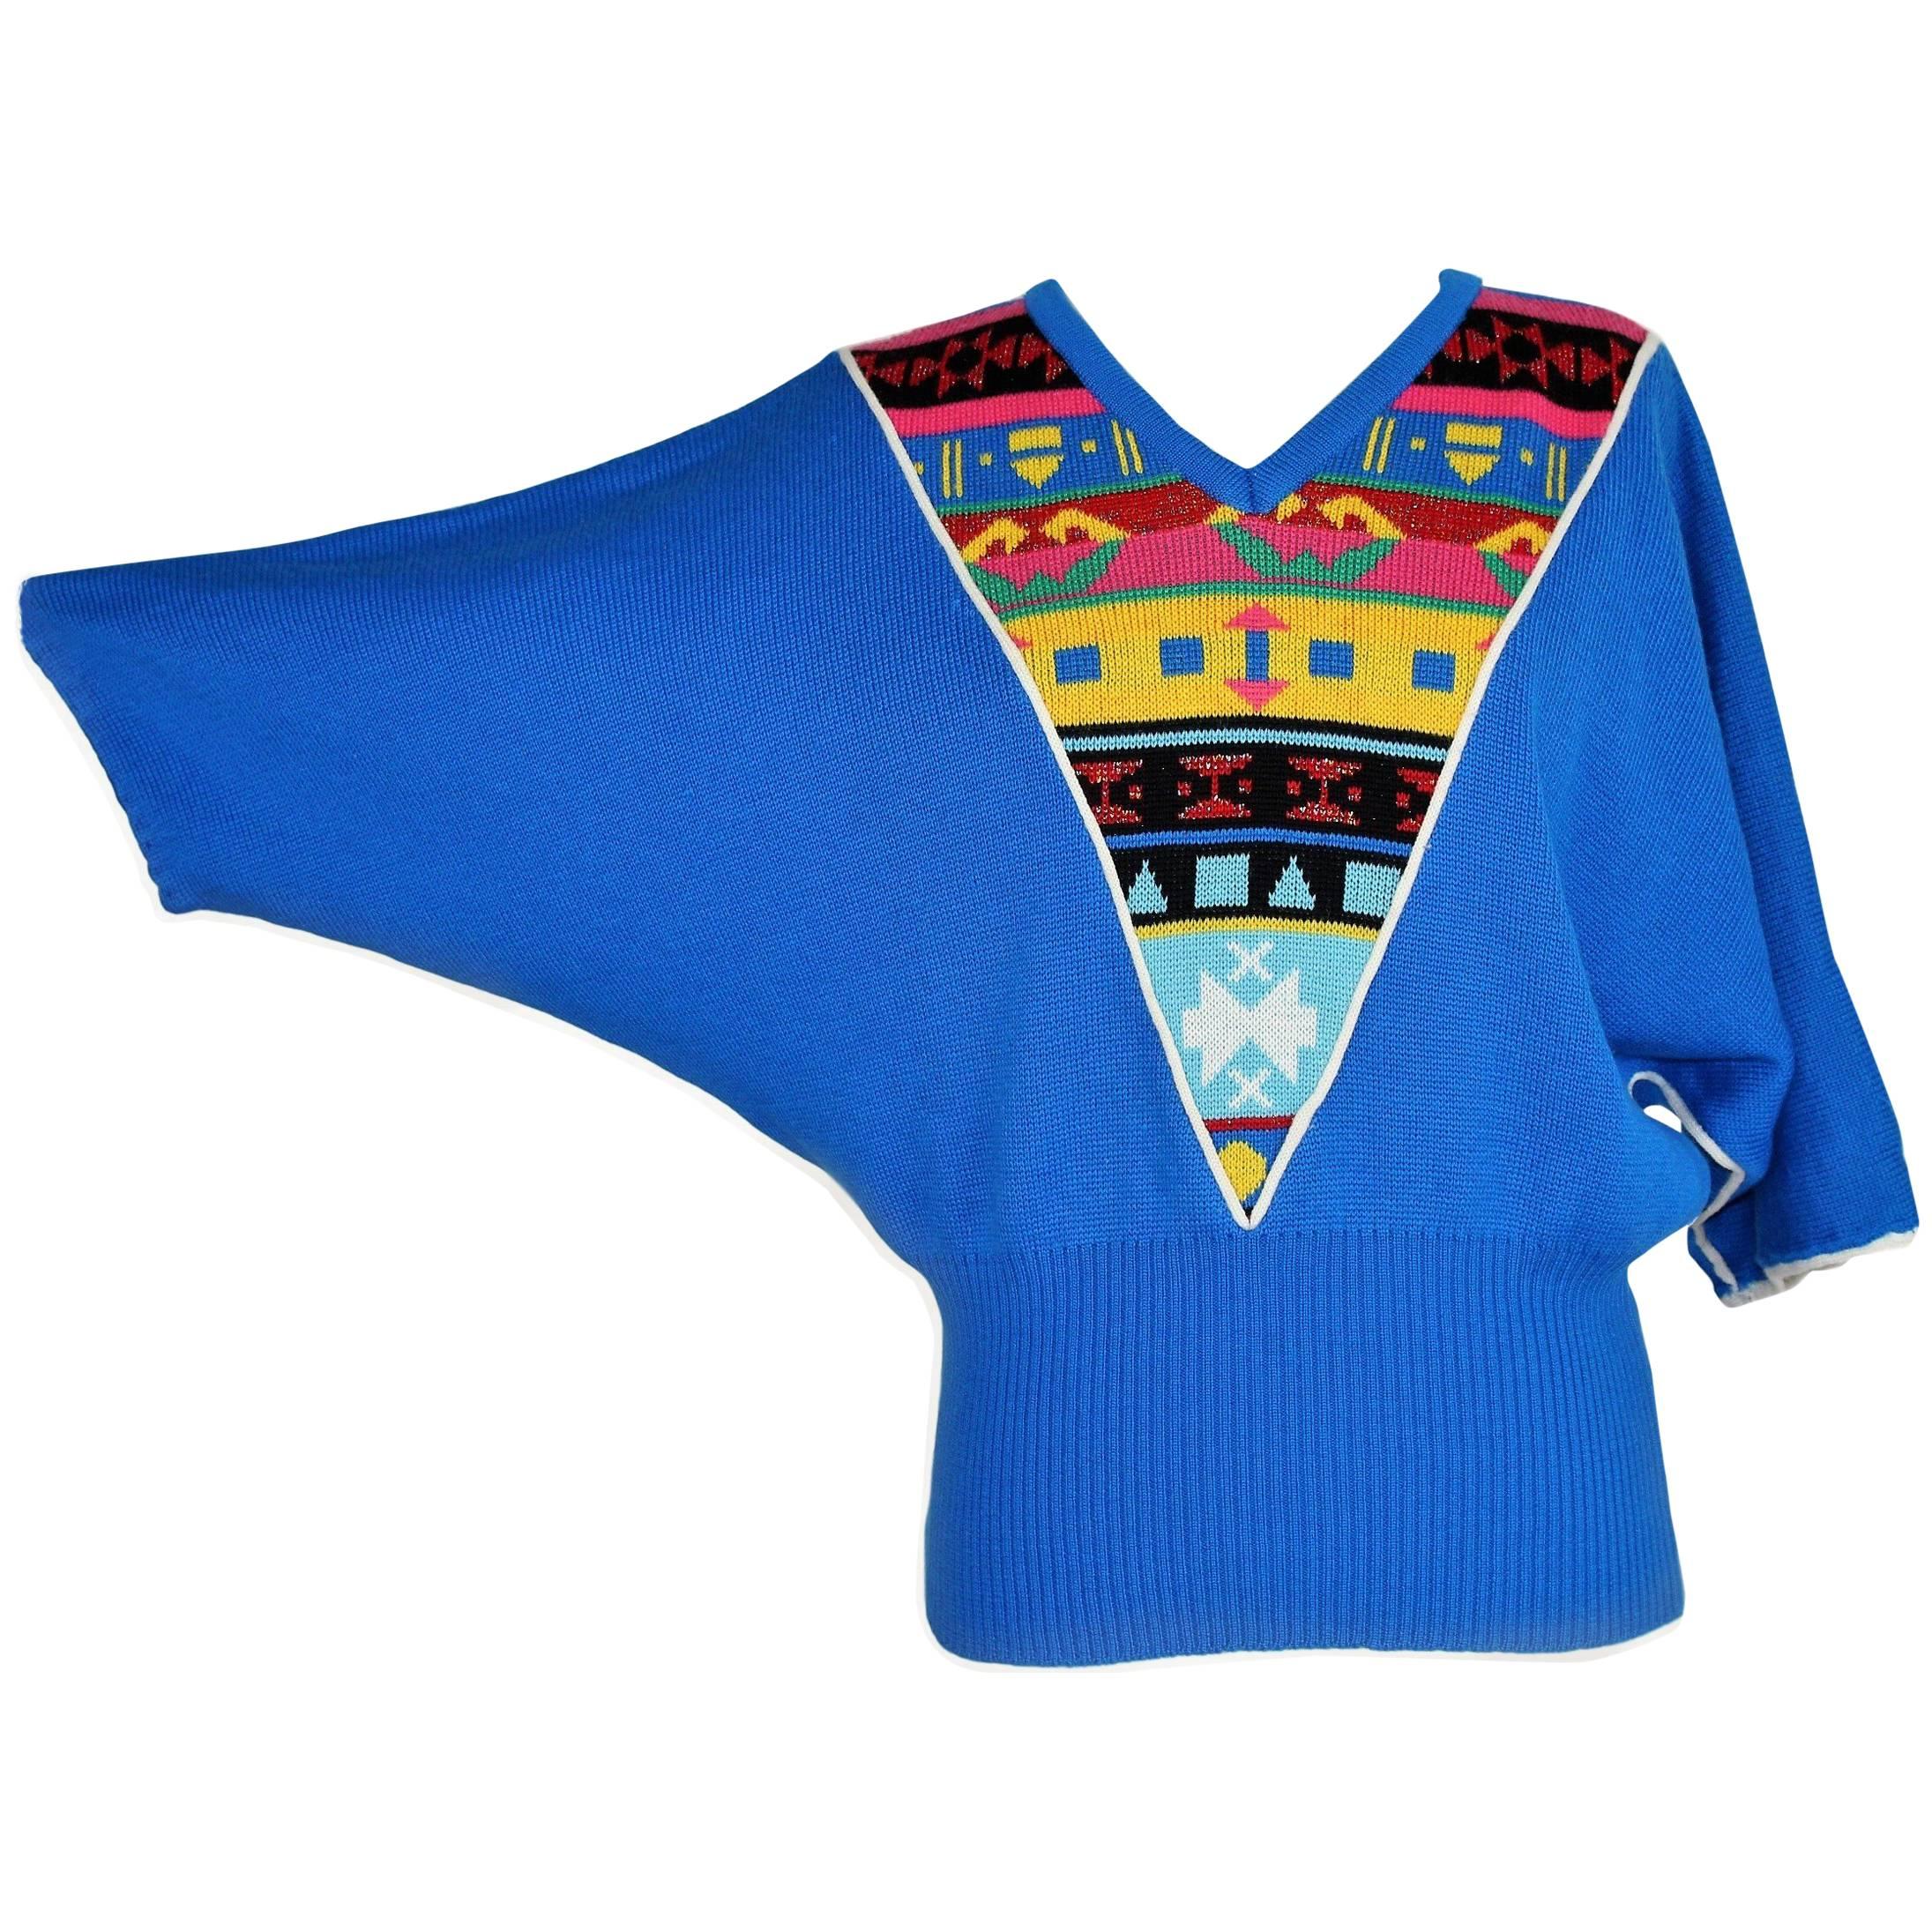 Pierre Cardin Paris Batwing Blue V-Neck Sweater, 1980 For Sale